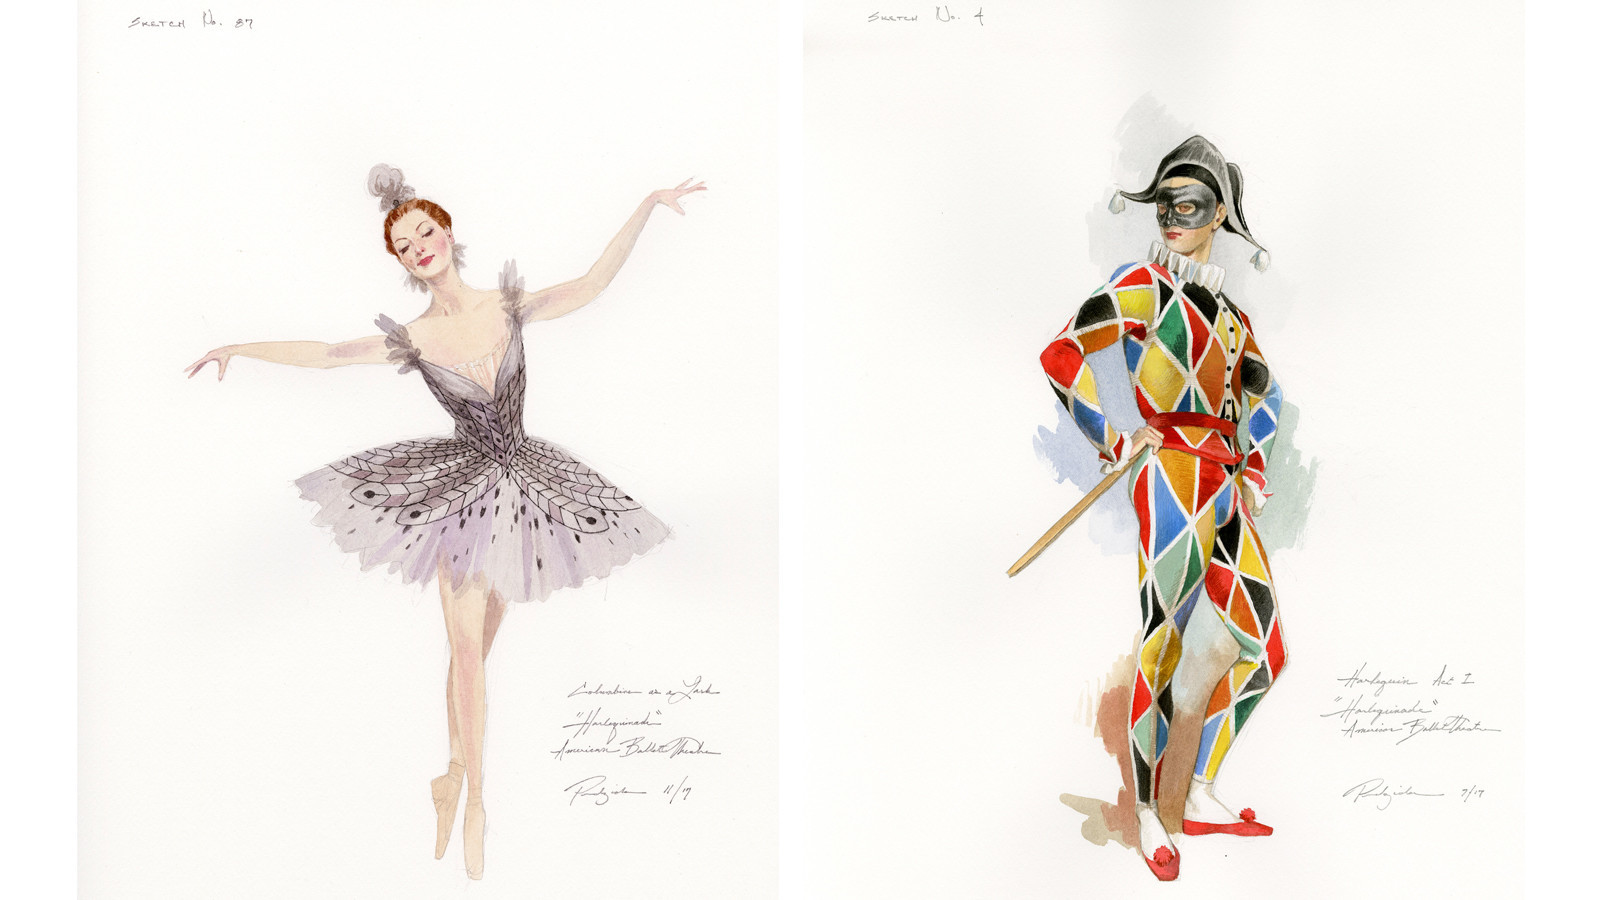 Robert Perdziola's sketches for the Columbine Lark and Harlequin costumes in American Ballet Theatre's 